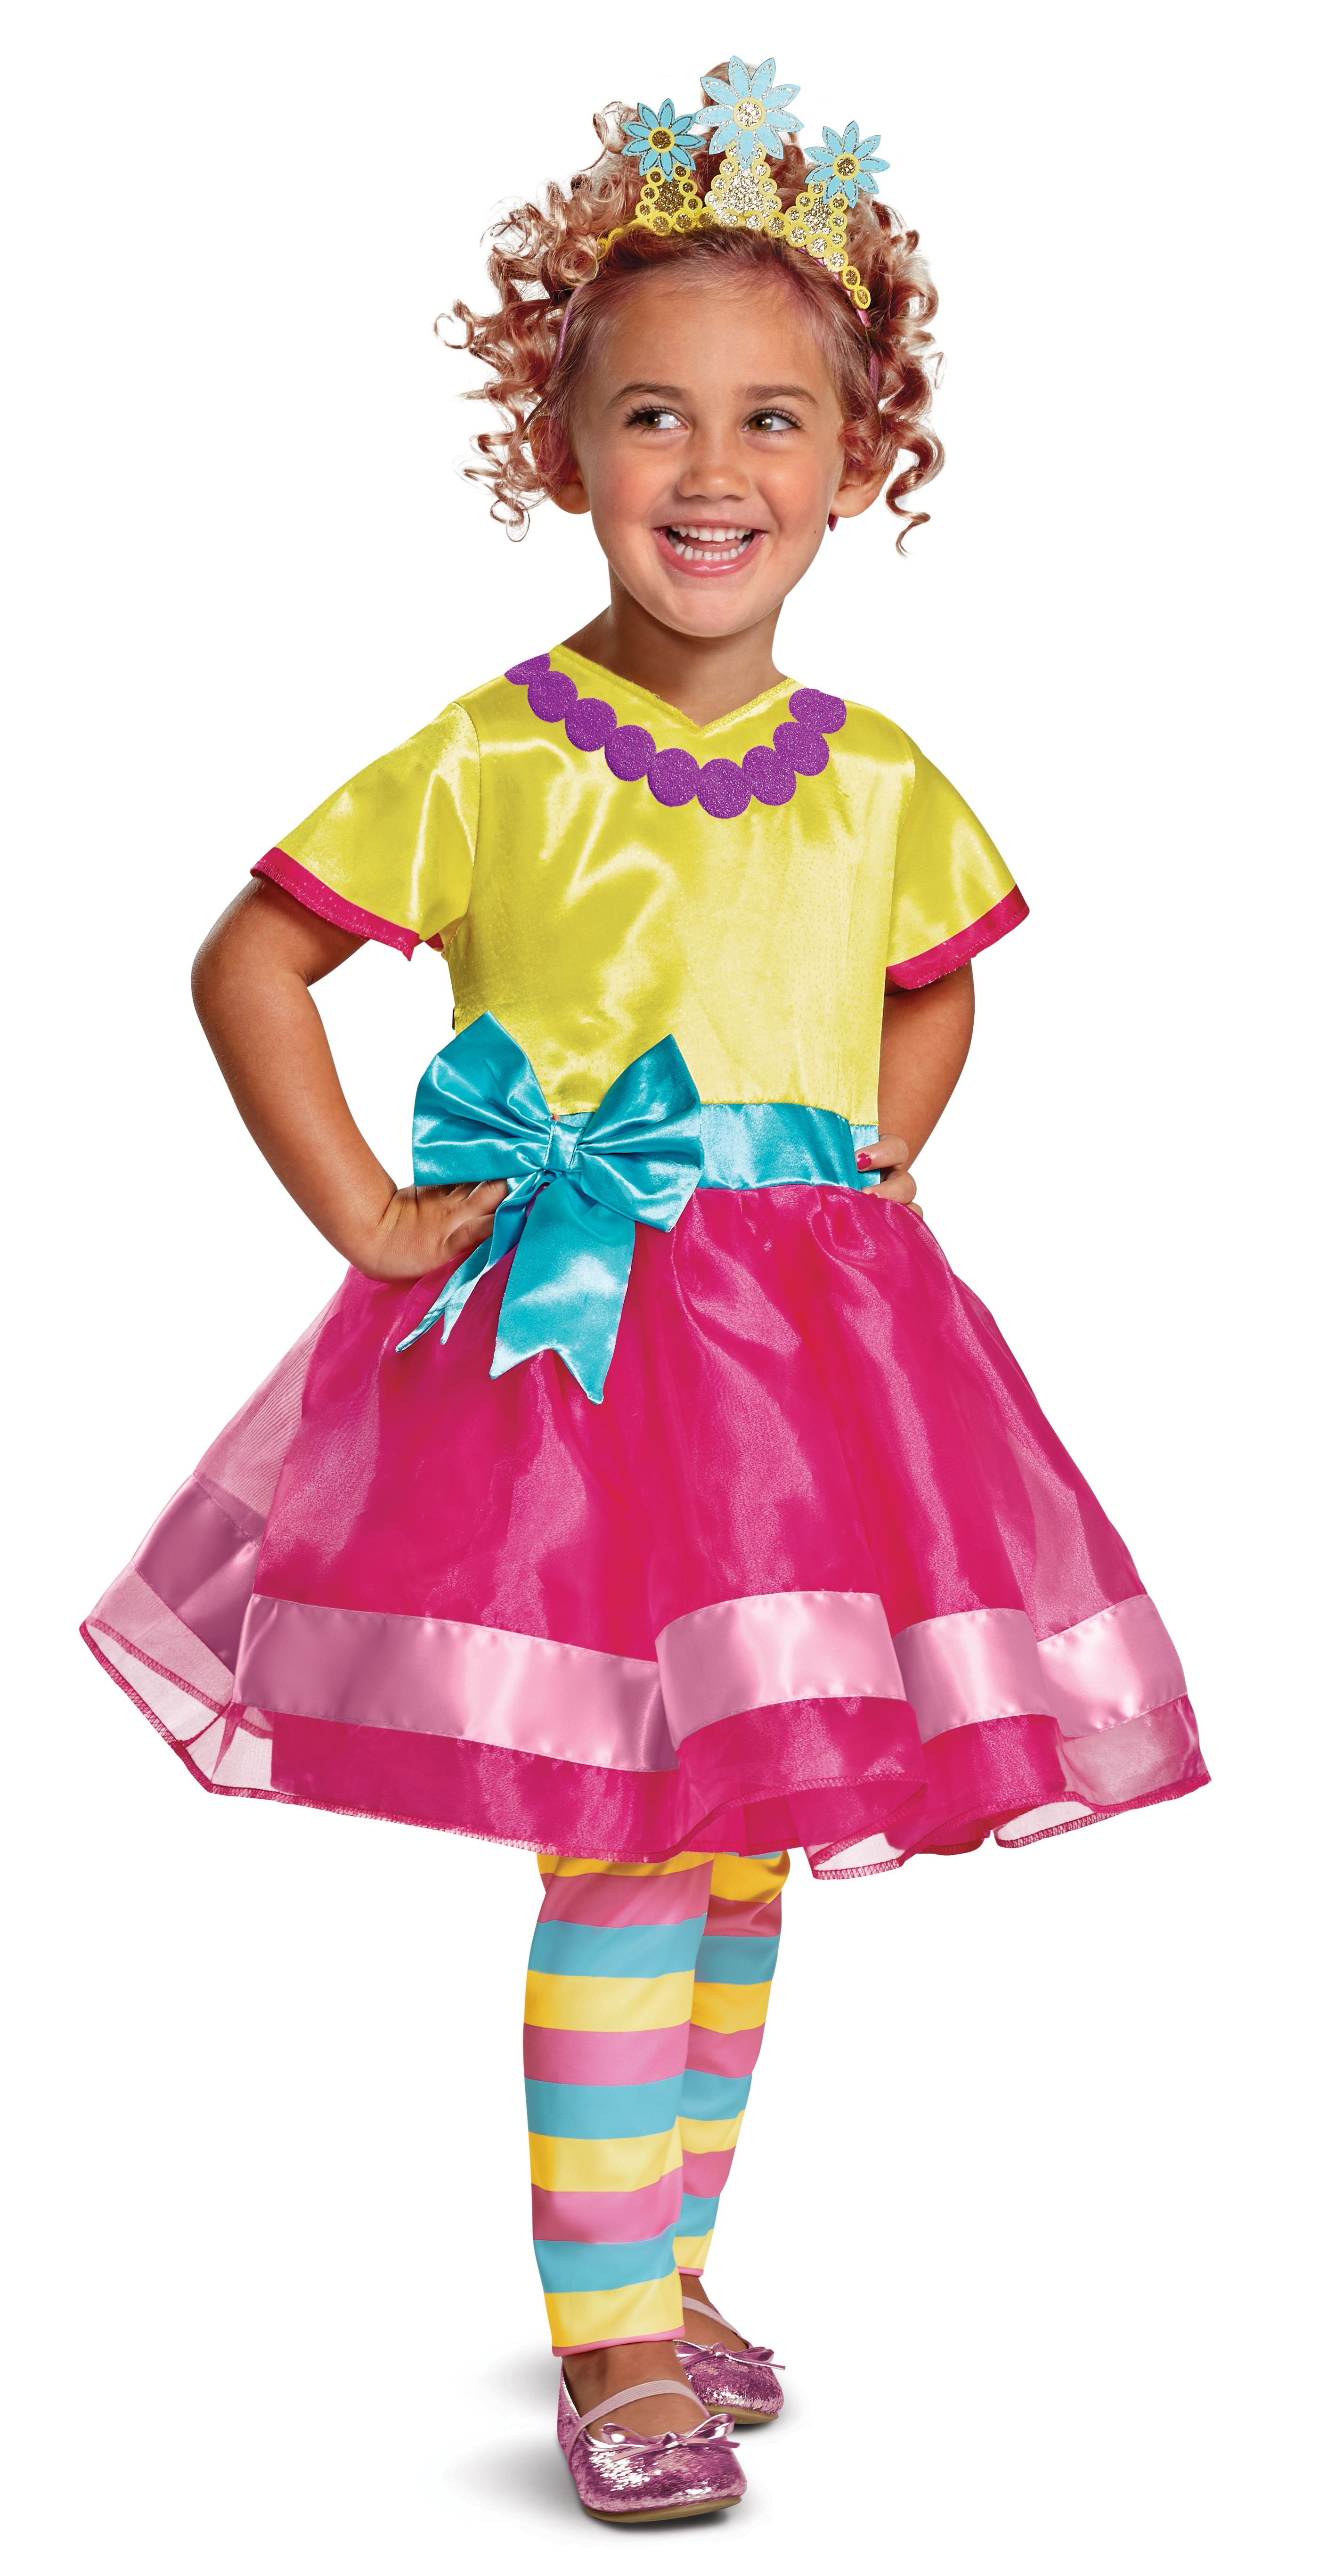 Fancy Nancy Classic Toddler Halloween Costume - image 1 of 3